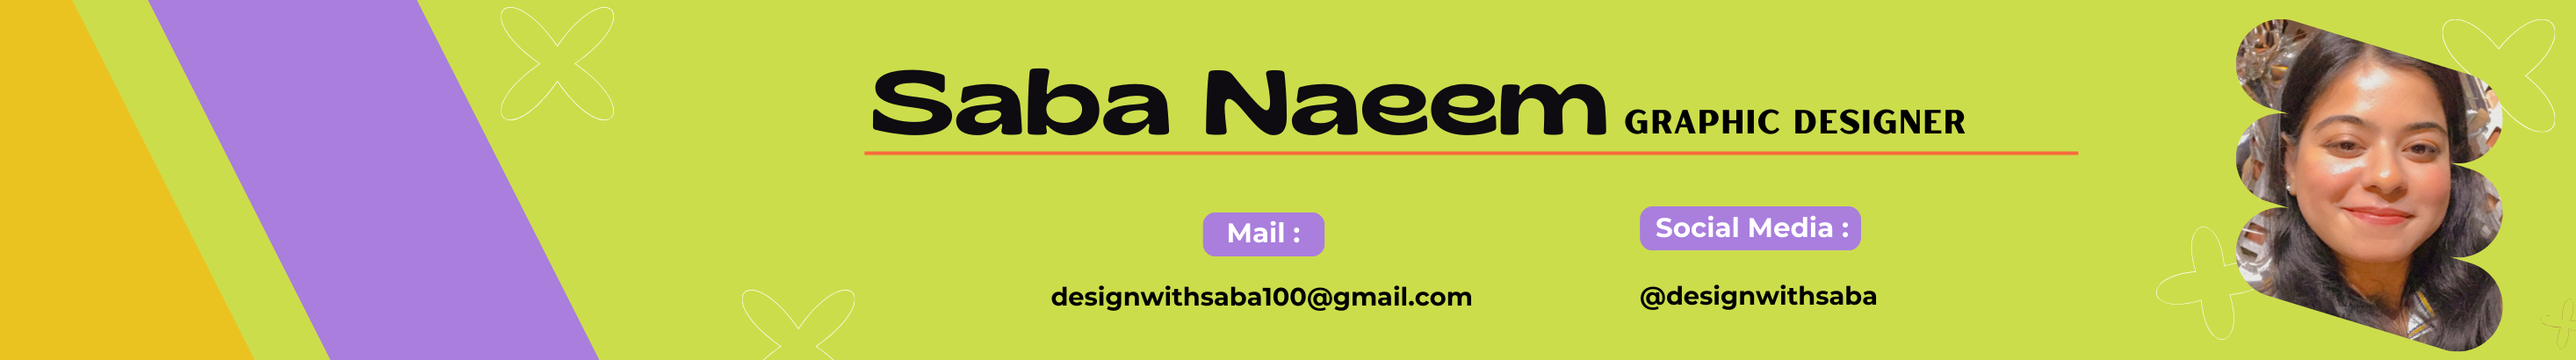 Saba Naeem's profile banner